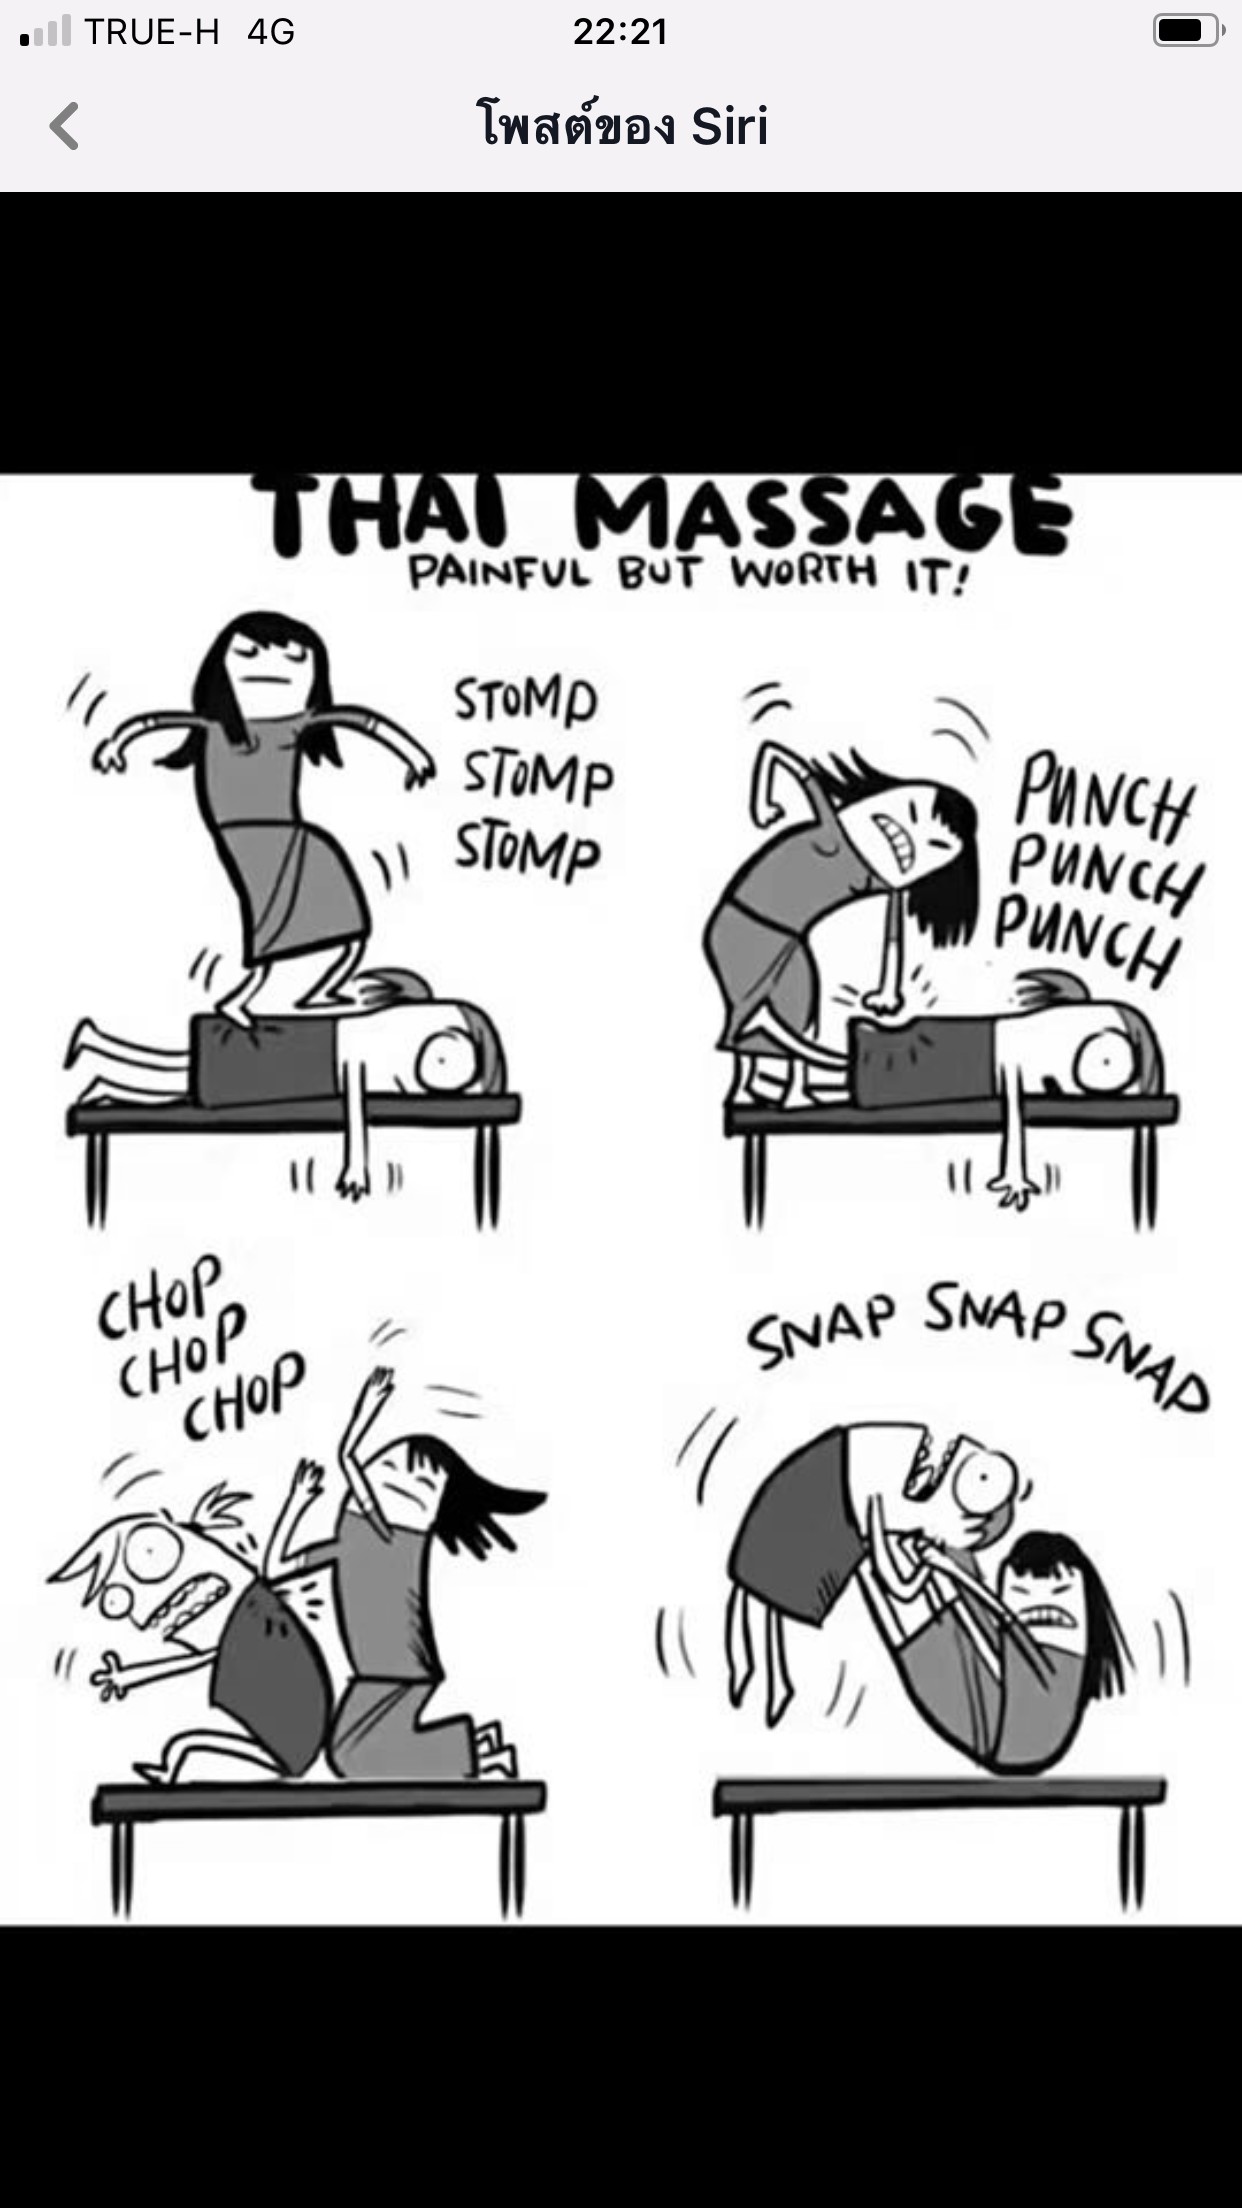 Шутки про тайский массаж